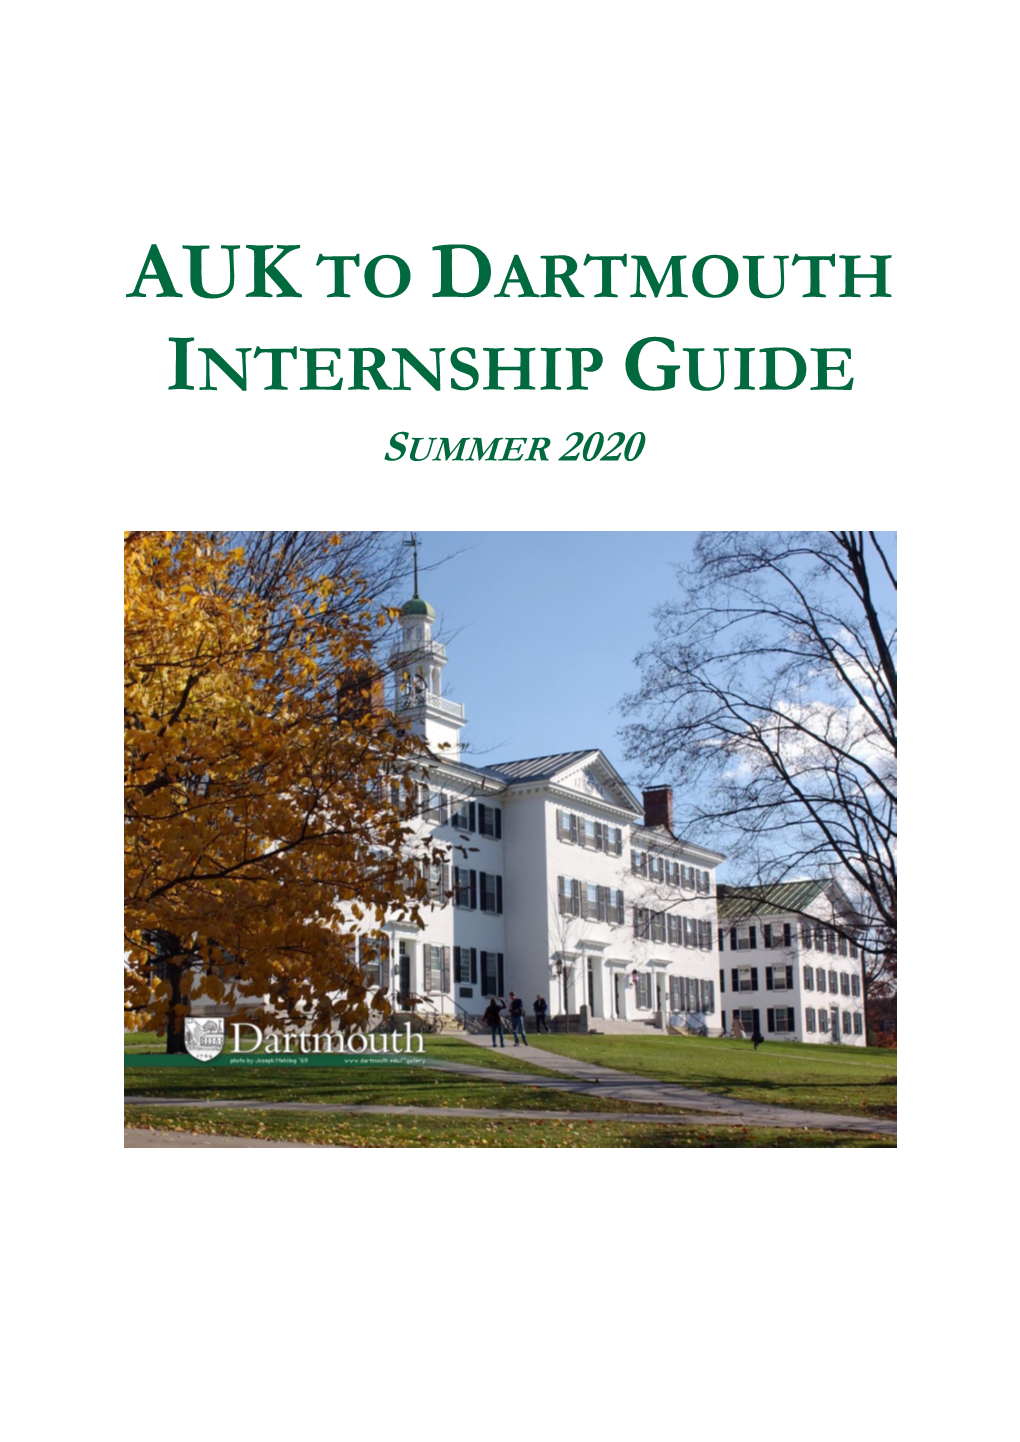 Auk to Dartmouth Internship Guide Summer 2020